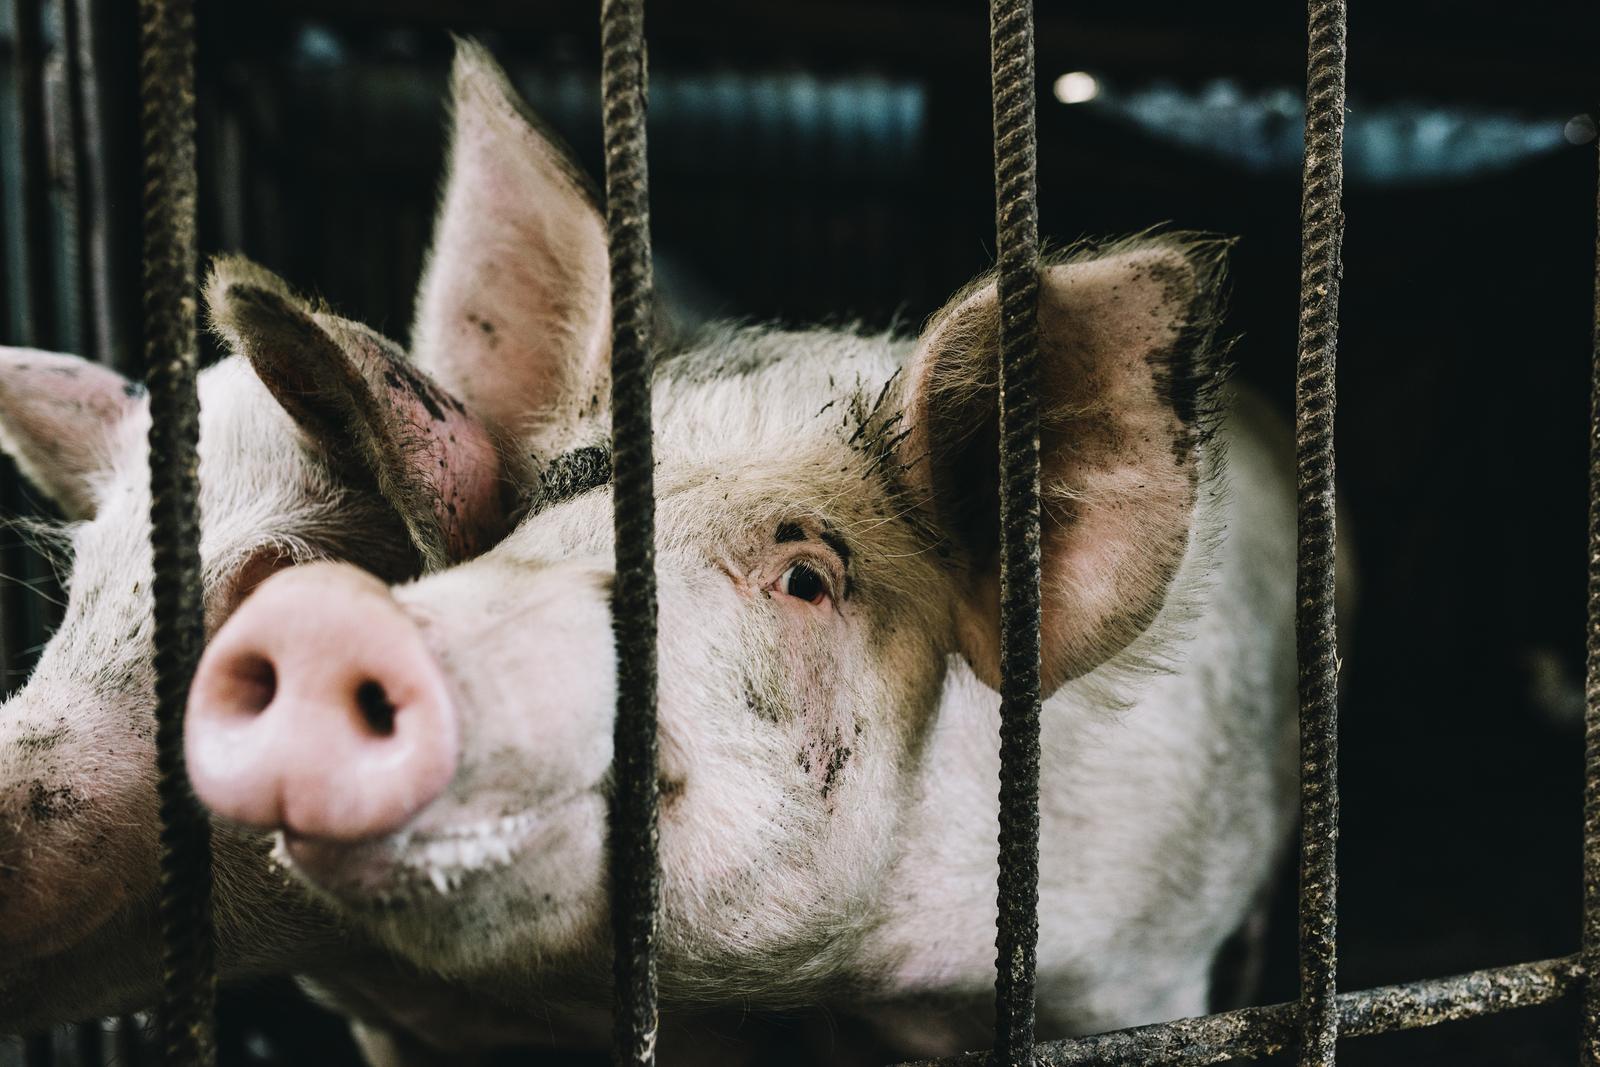 KEHTNA SEAKASVATUS OÜ - Raising of swine/pigs in Estonia